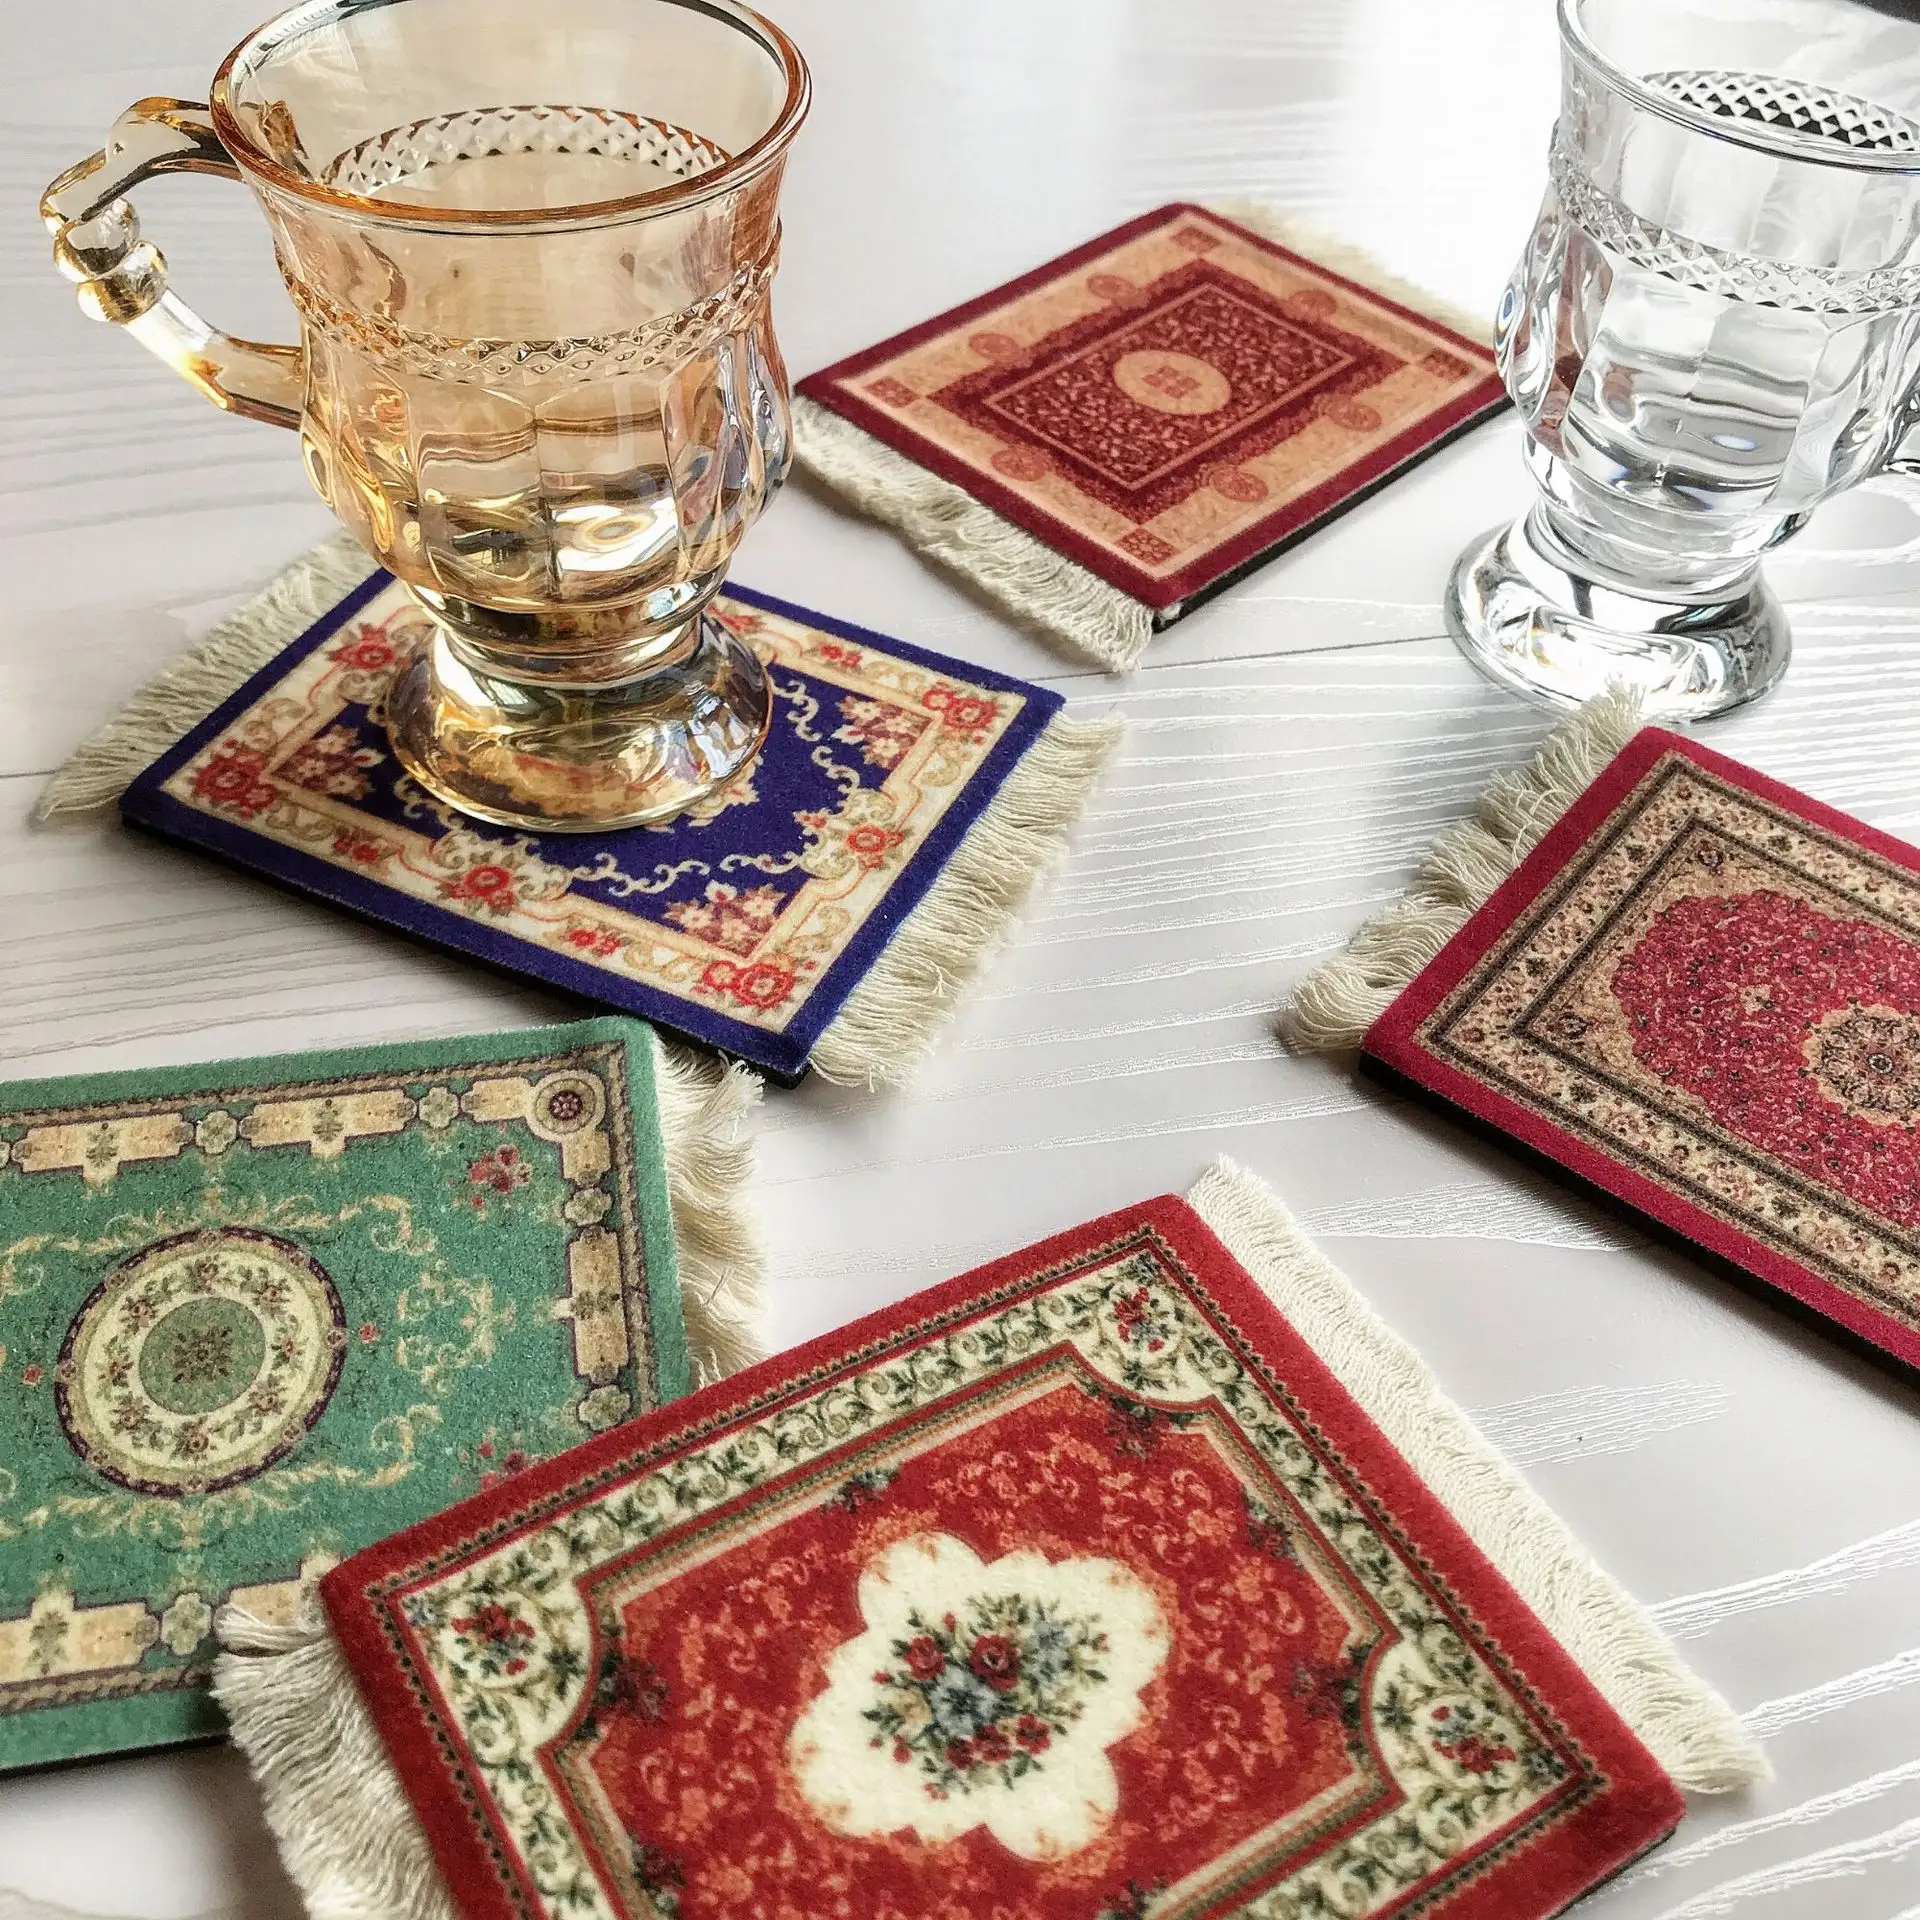 Posavasos Vintage con borlas, almohadilla aislante persa, minialfombra tejida, precio de fábrica